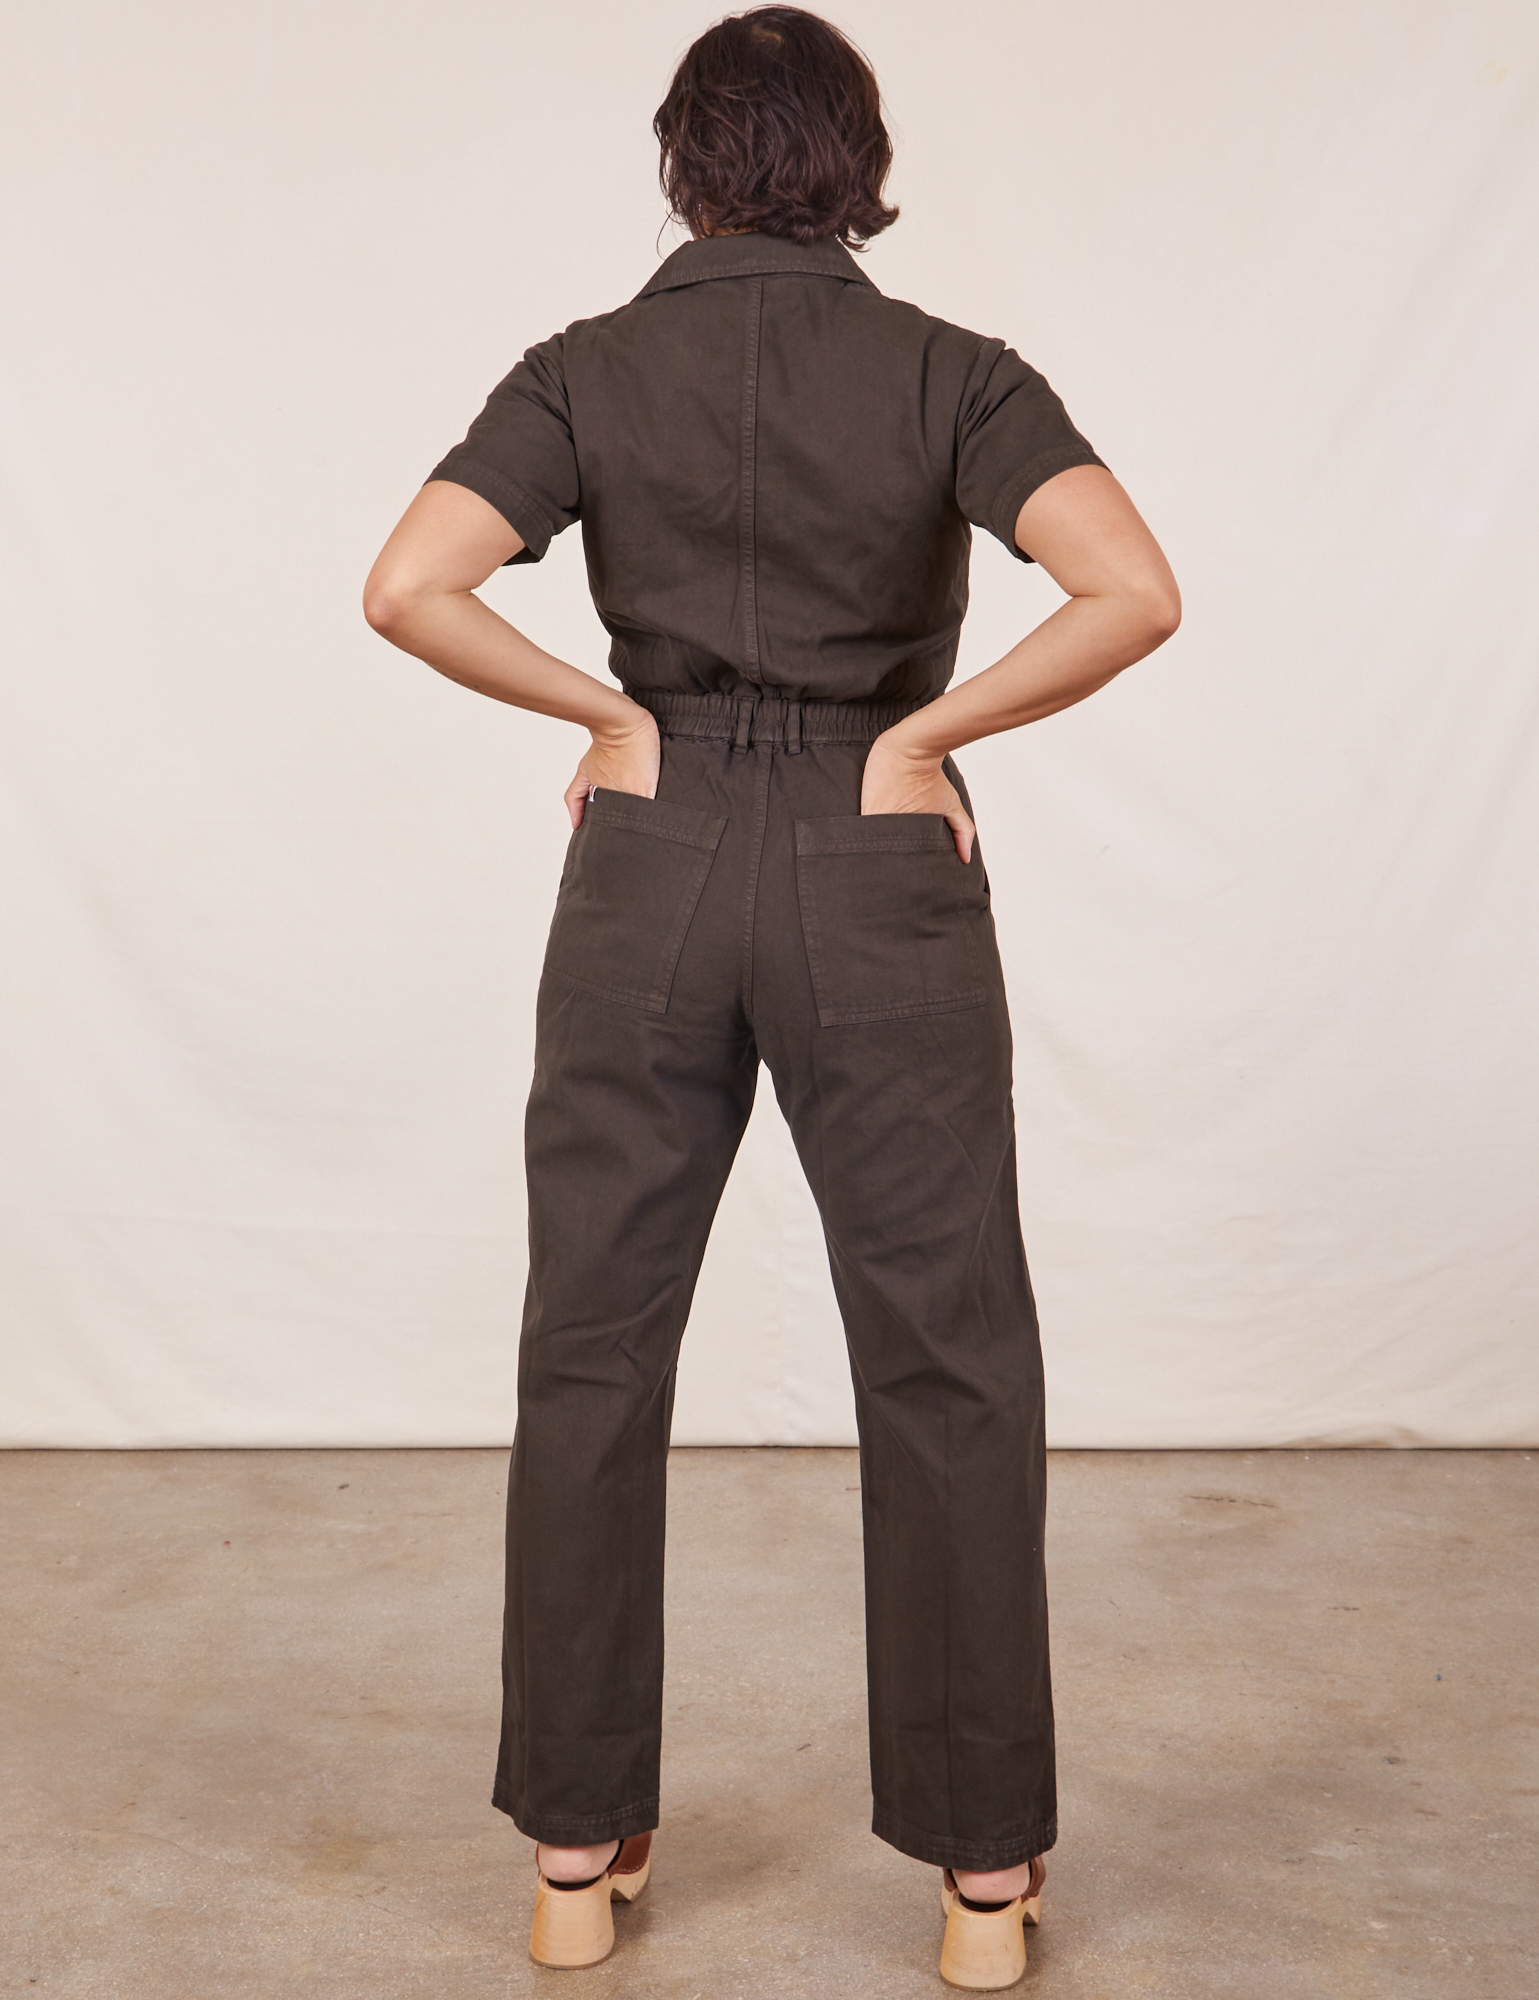 Back view of Short Sleeve Jumpsuit in Espresso Brown worn by Tiara.